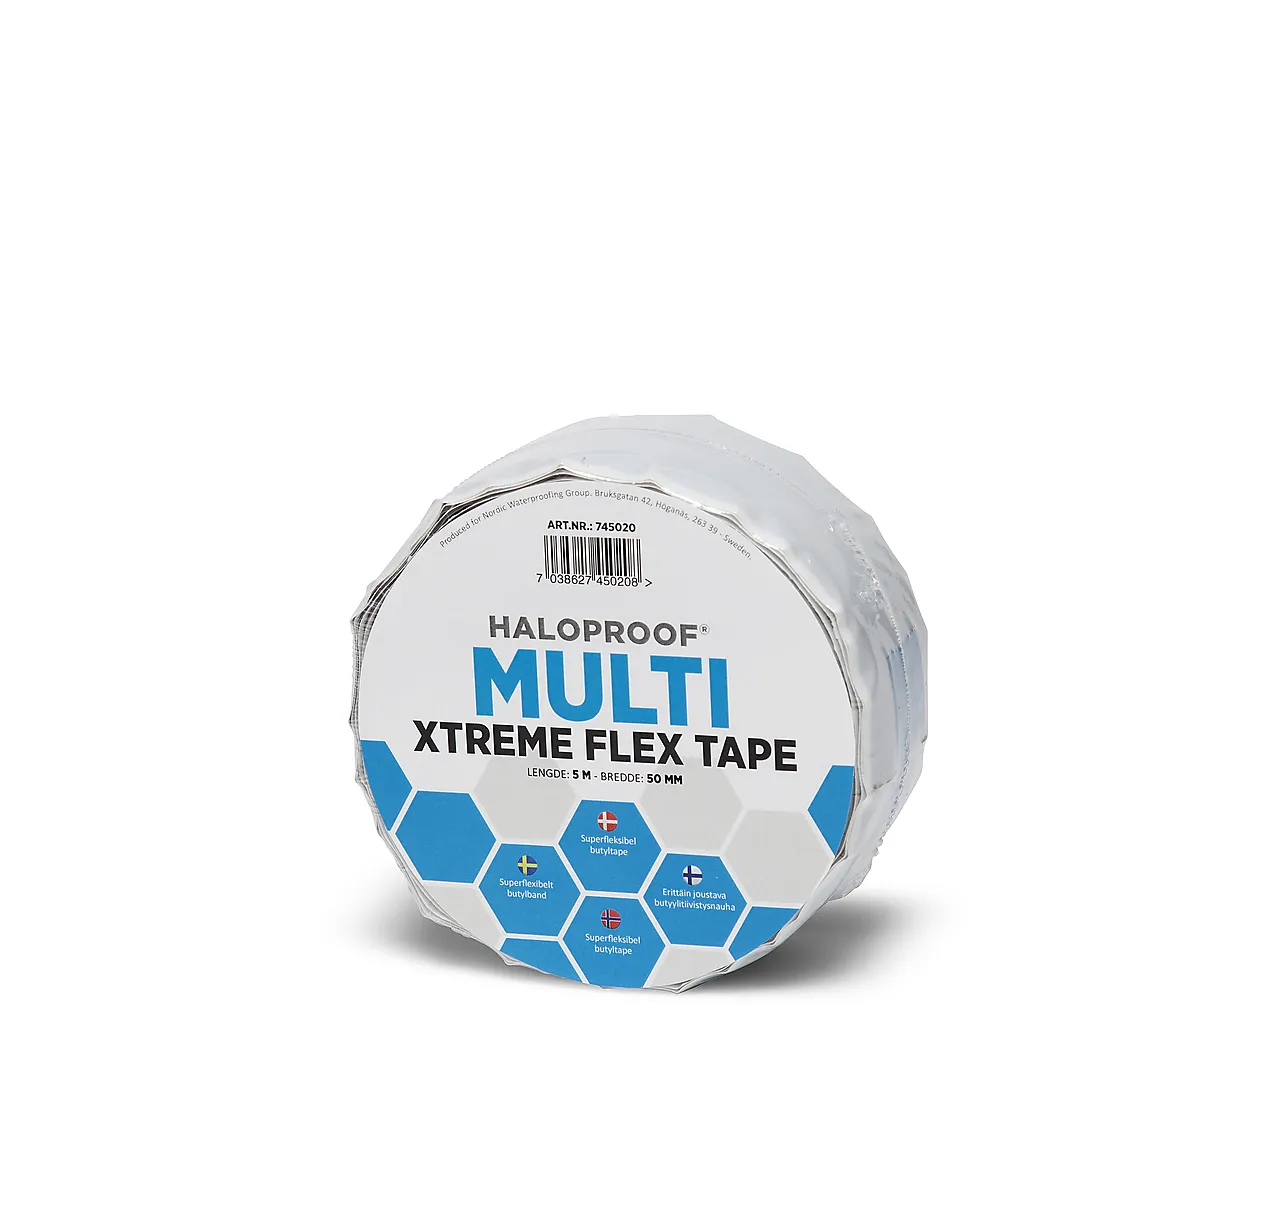 Tettebånd fleksibelt 1,5x50mmx5m haloproof flex tape multi xtreme